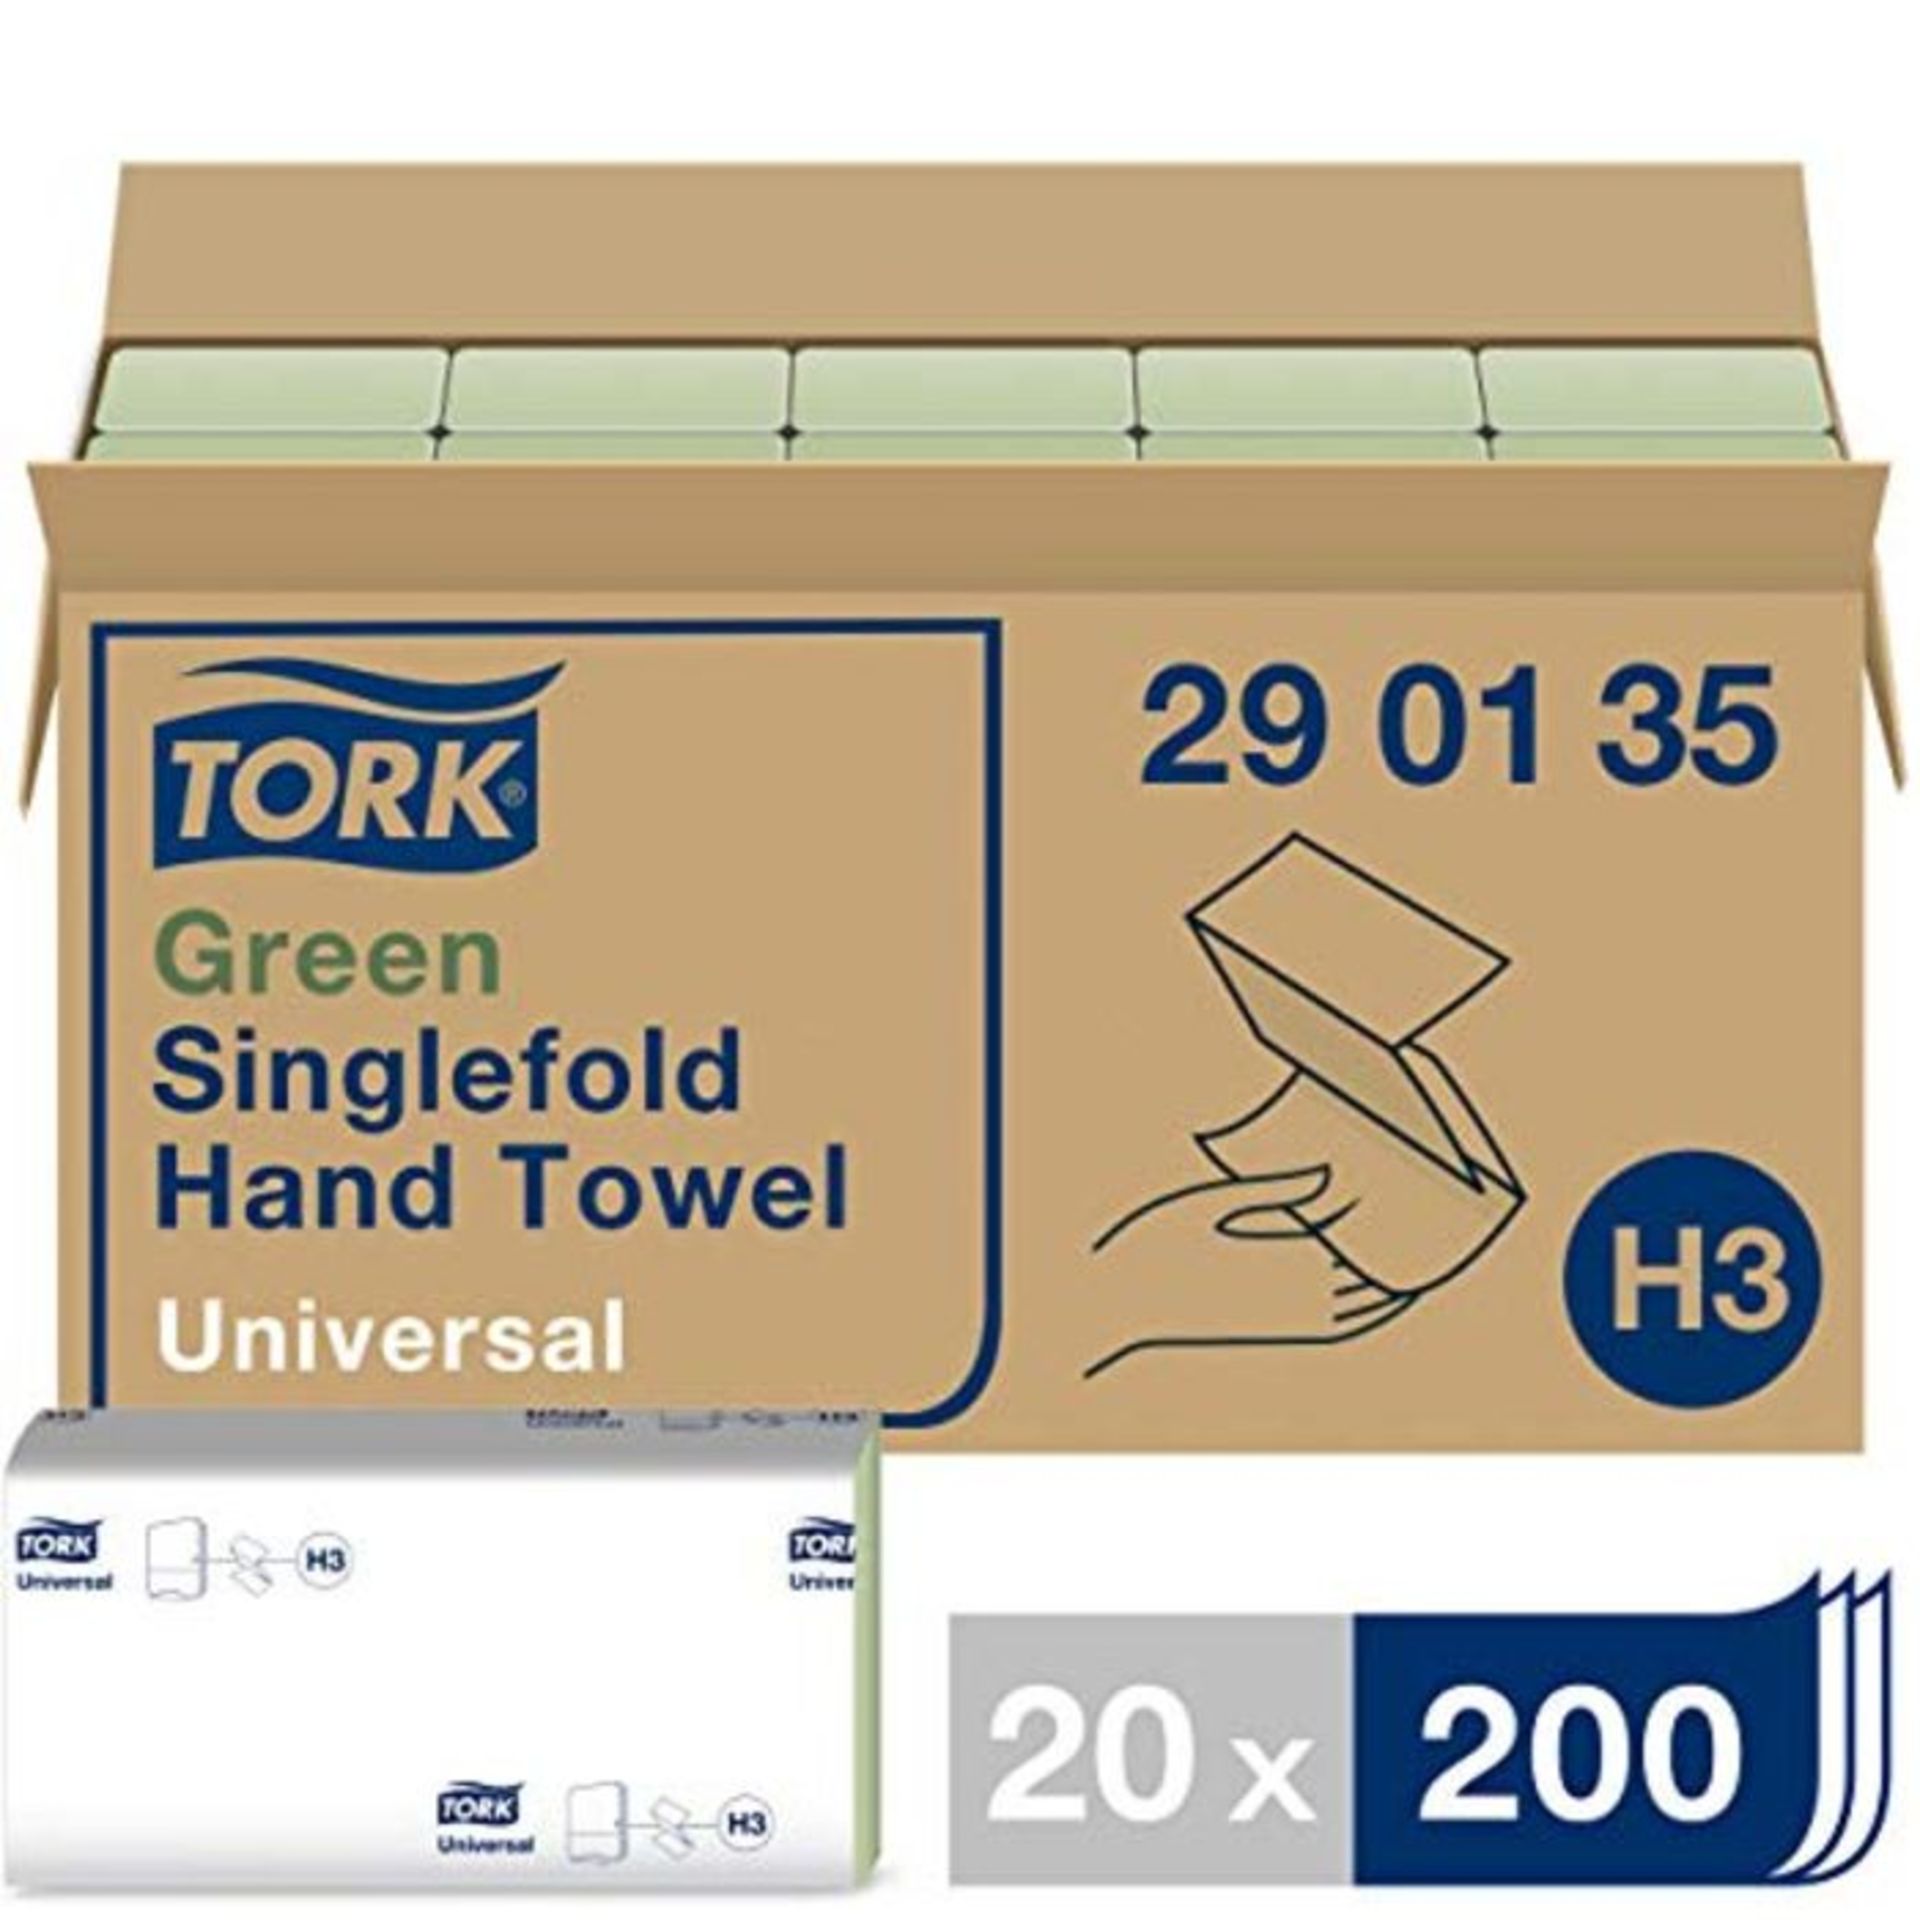 Tork Green Singlefold Hand Towels 290135 - H3 Universal Folded Paper Towels for Single